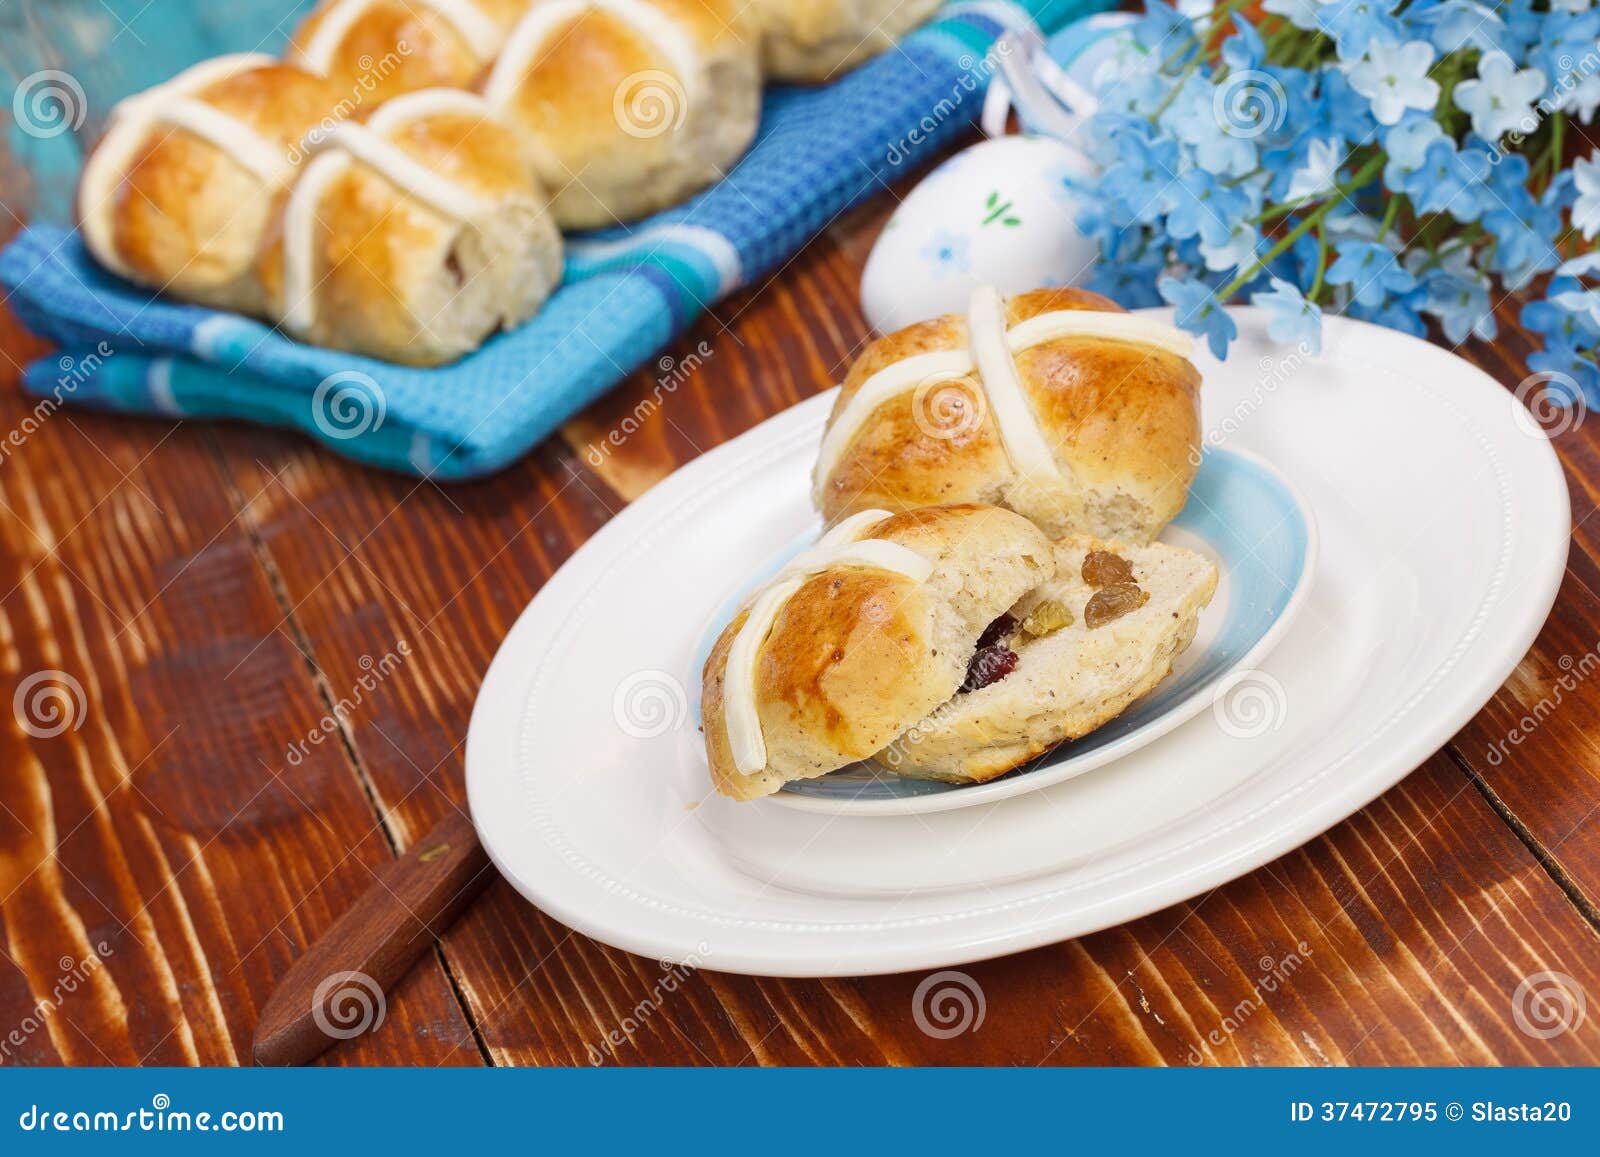 free clipart hot cross buns - photo #42